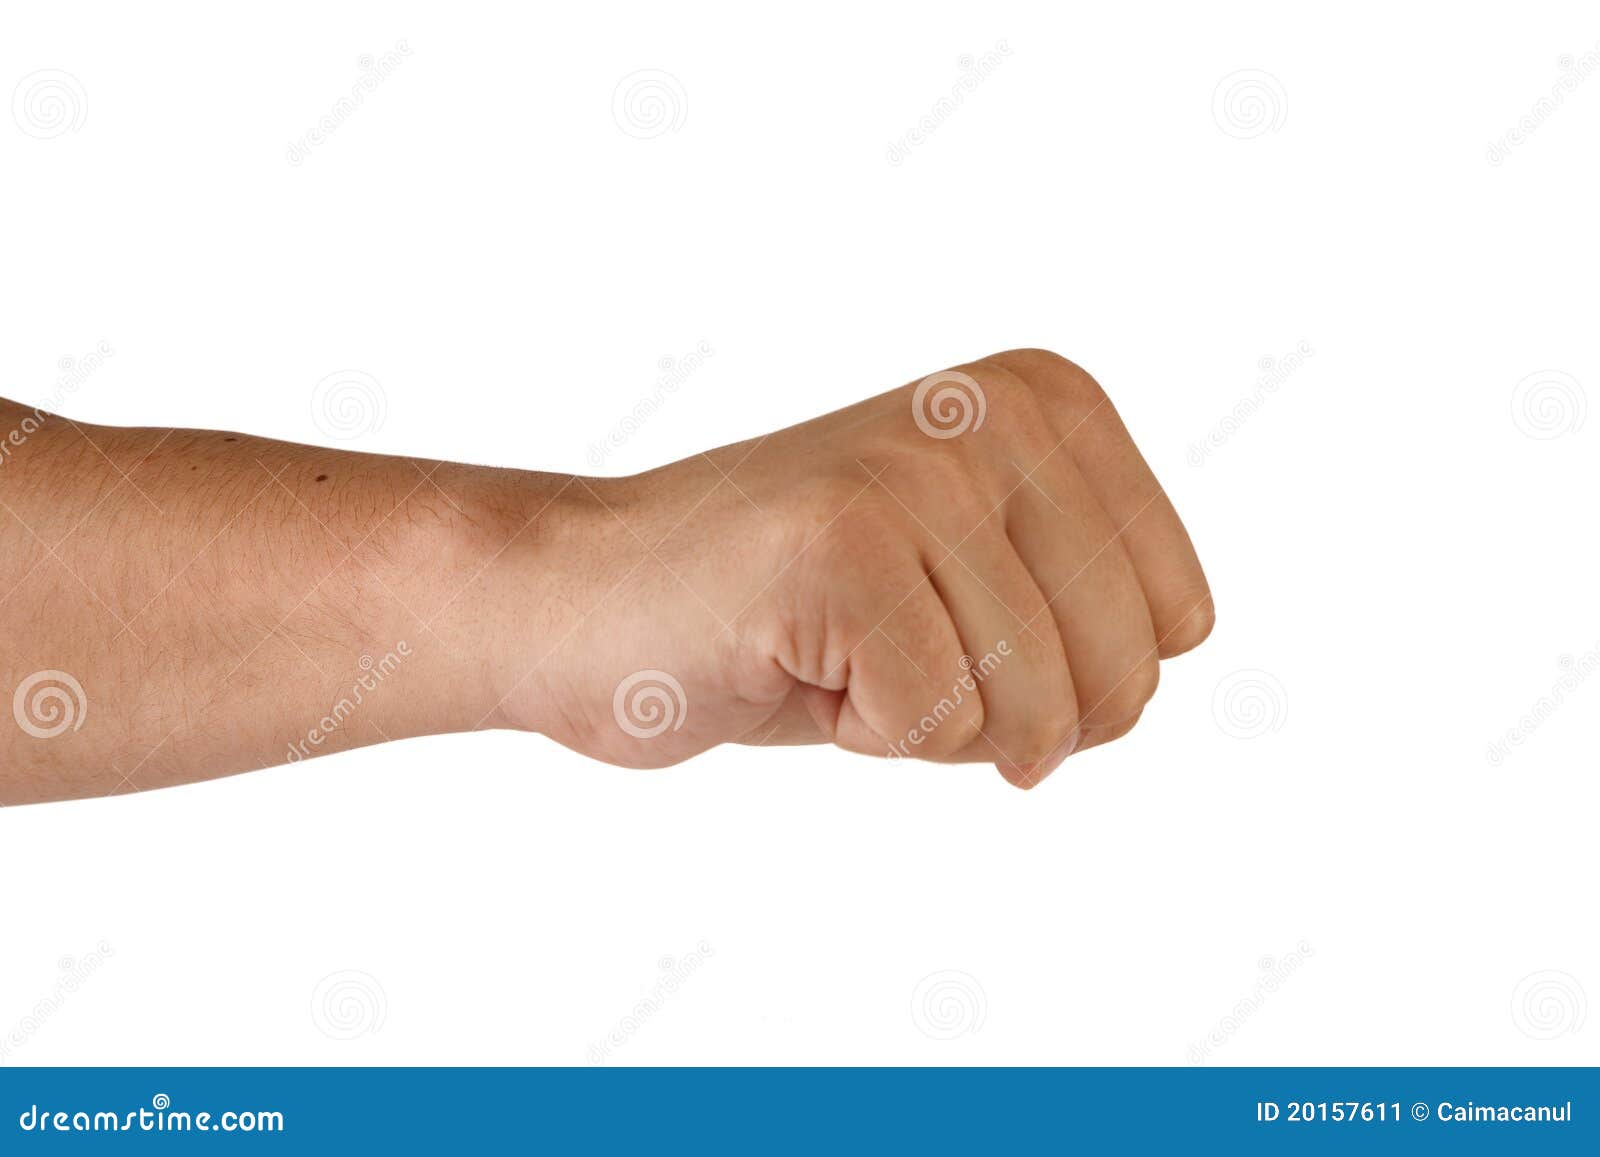 Рука в кулаке. Вытянутая рука в кулаке. Тыльная сторона кулака. Мужская рука в кулаке.